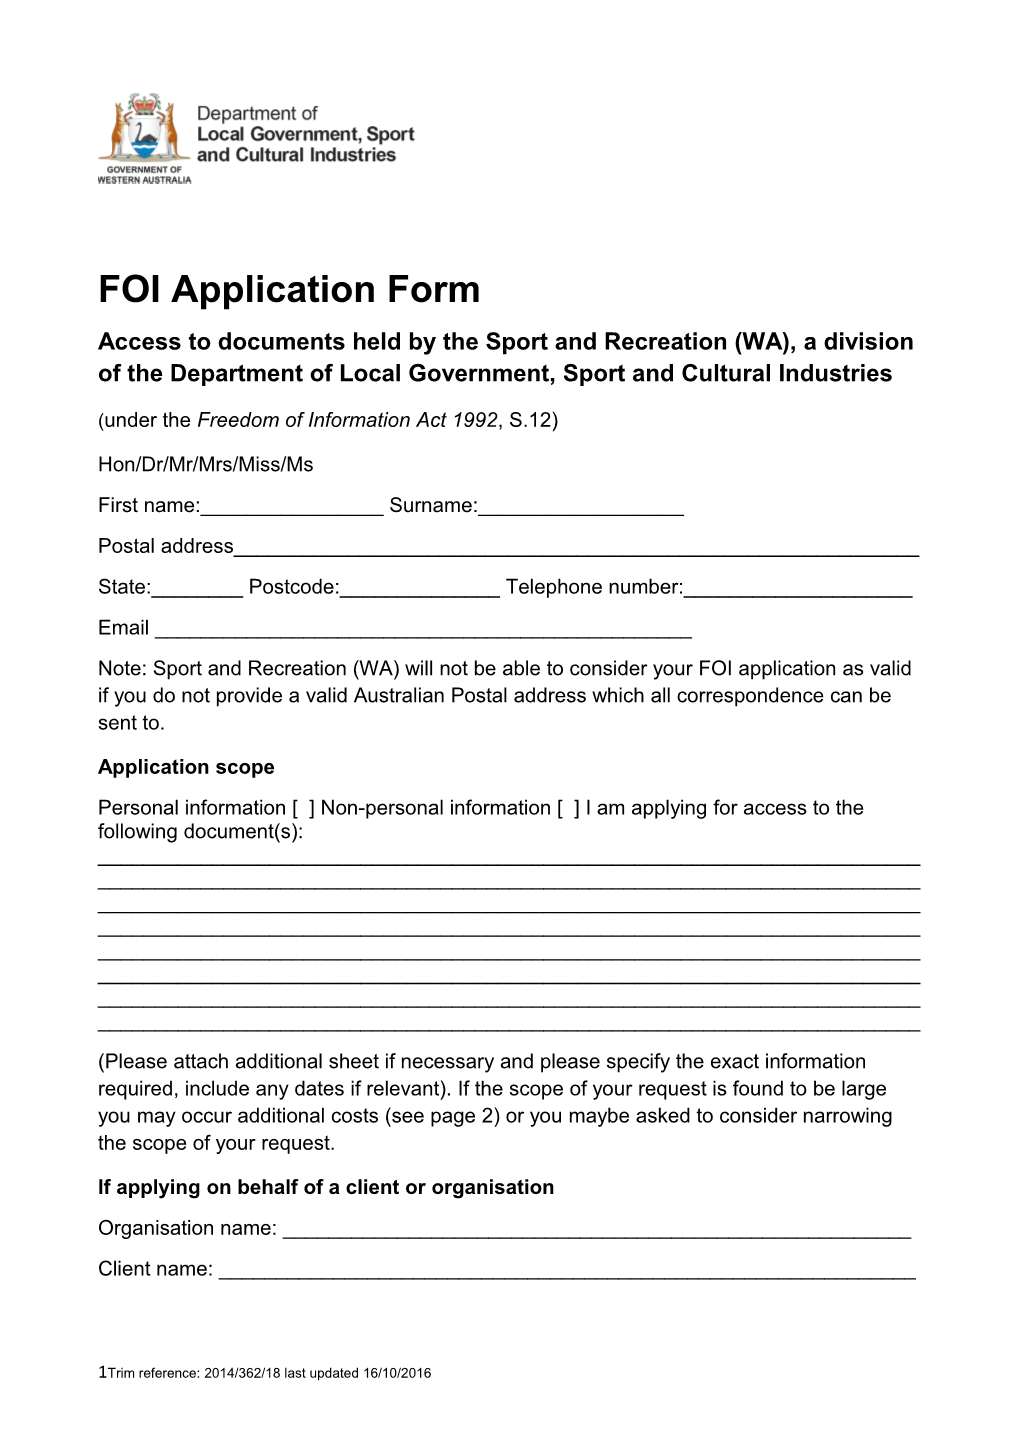 FOI Application Form